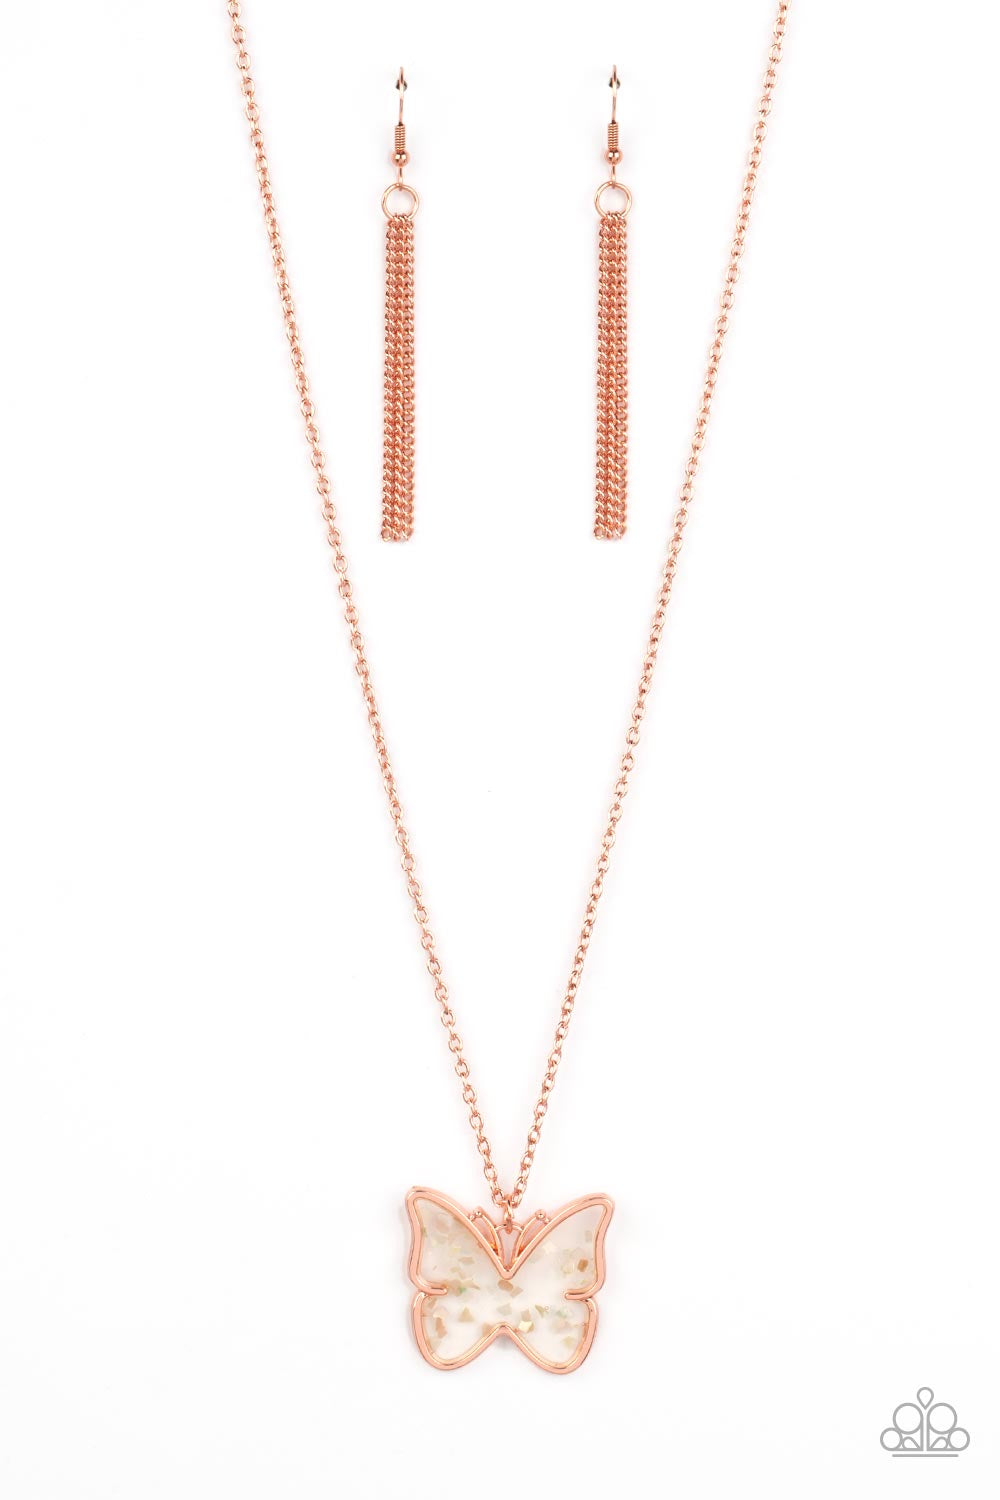 Paparazzi Gives Me Butterflies - Copper Necklace